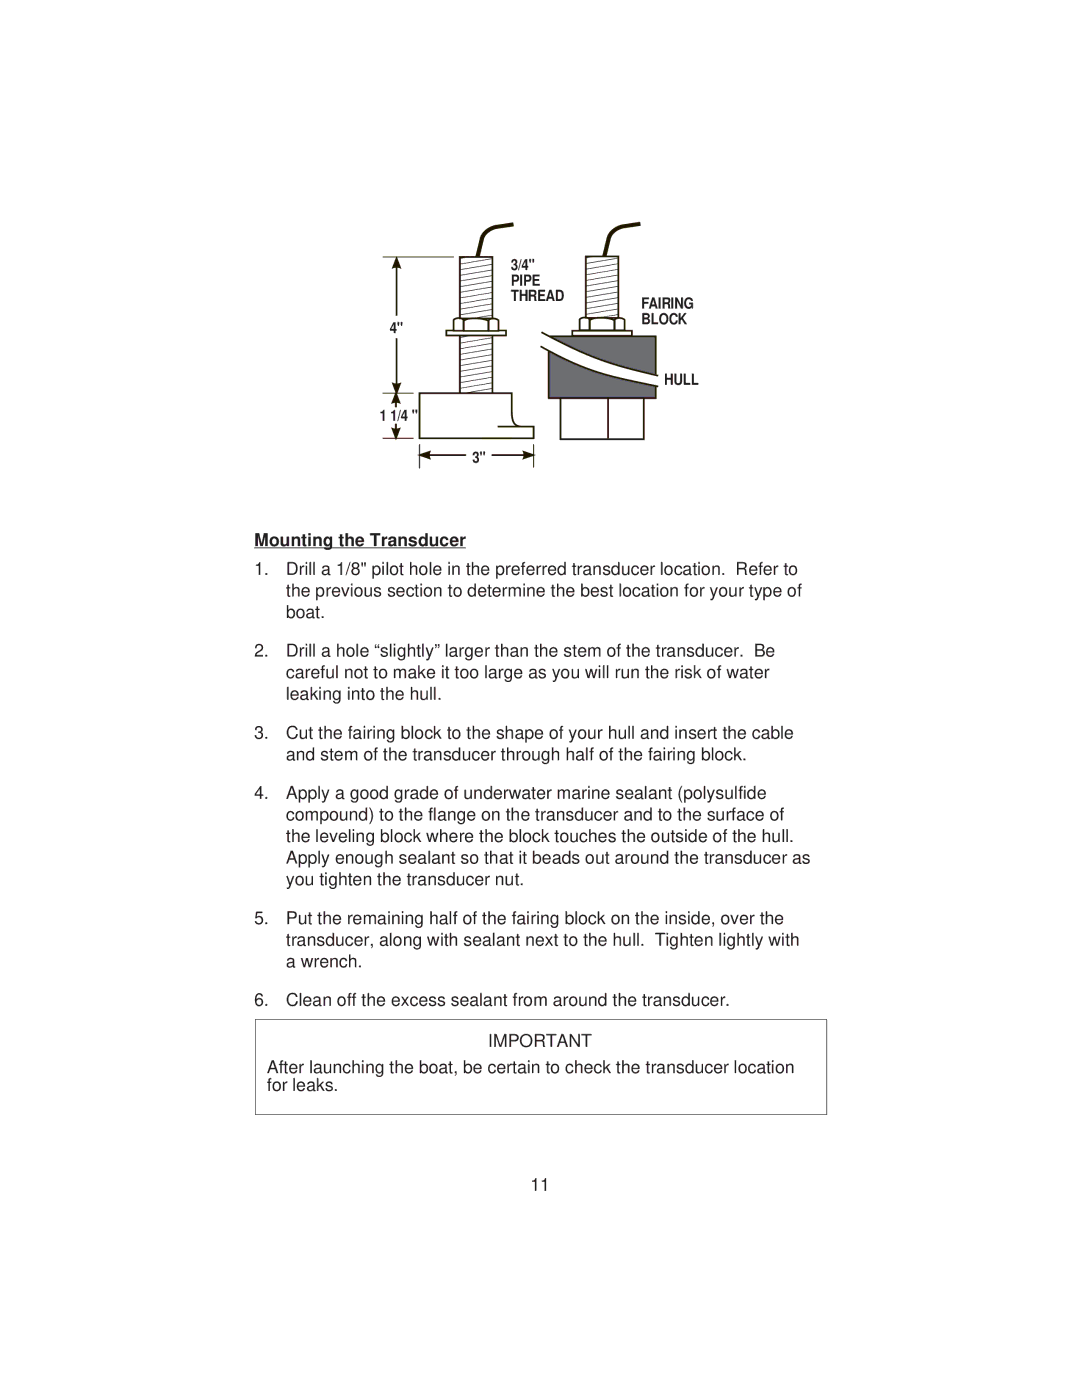 Uniden Clock manual Pipe Thread Fairing Block Hull 